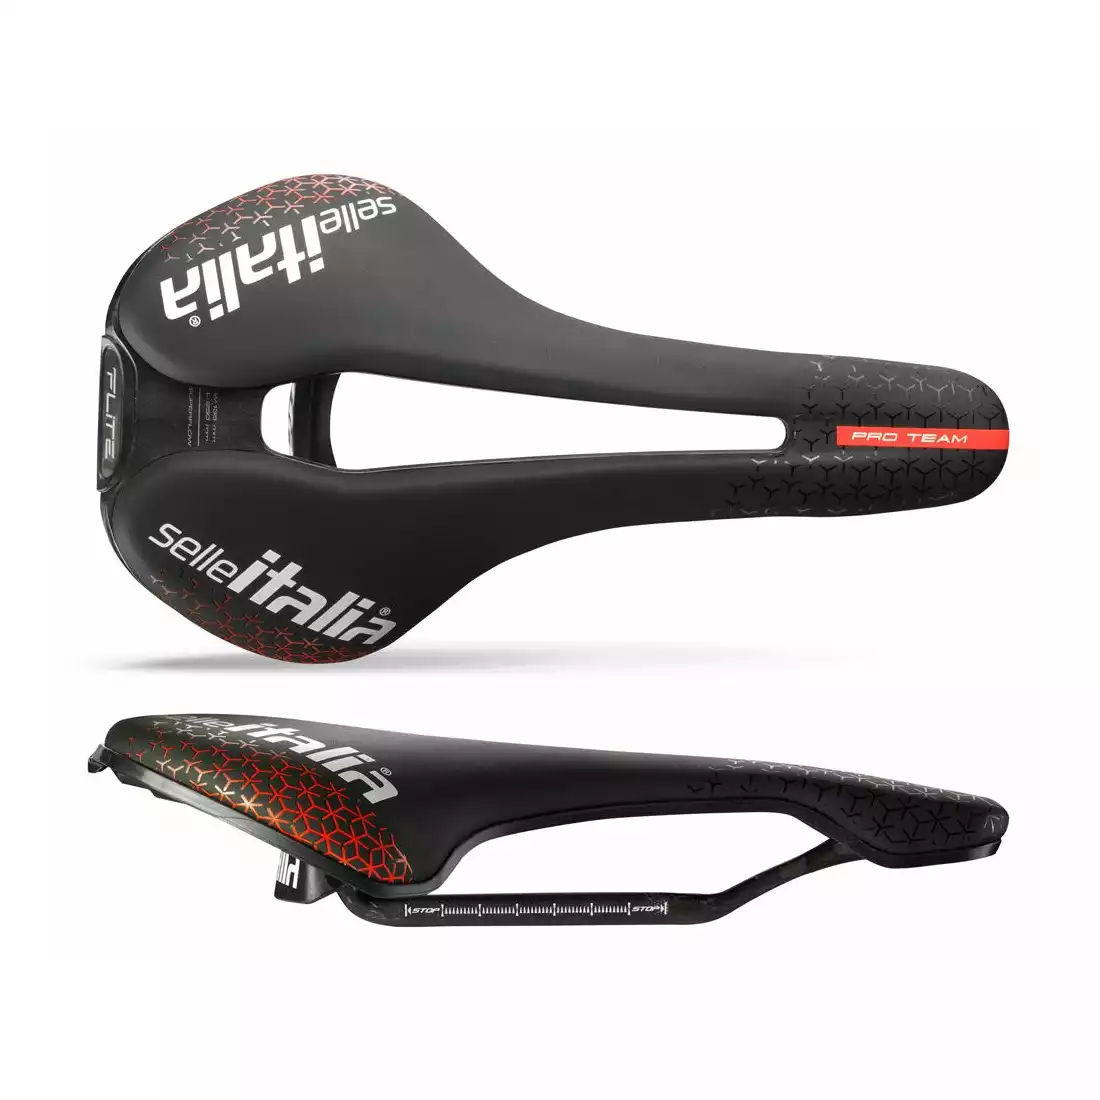 SELLE ITALIA FLITE Boost PRO TEAM bicycle saddle L3, Carbon, Fibra-Tek, Black